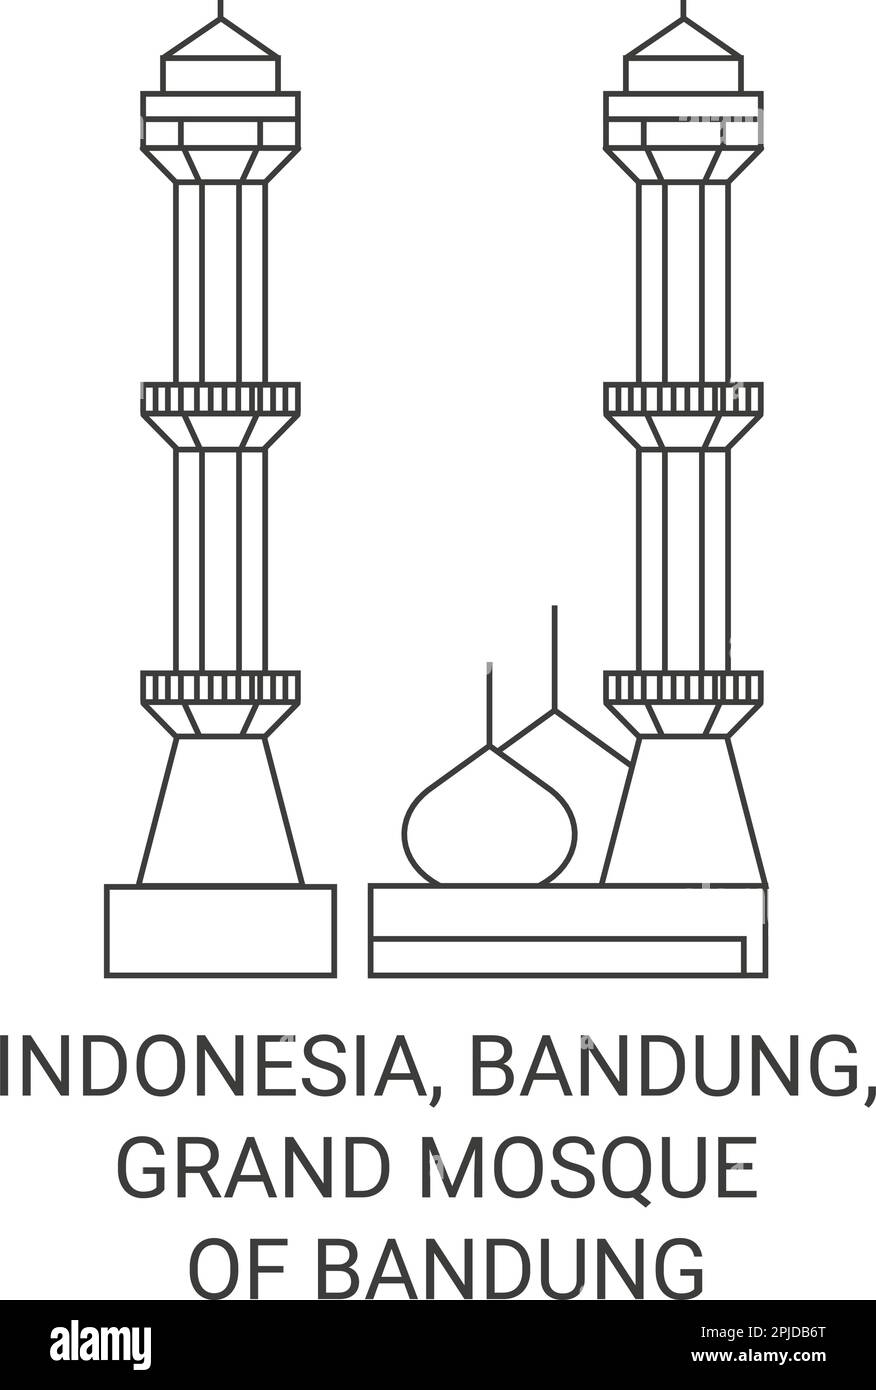 Indonesia, Bandung, Grand Mosque Of Bandung travel landmark vector ...